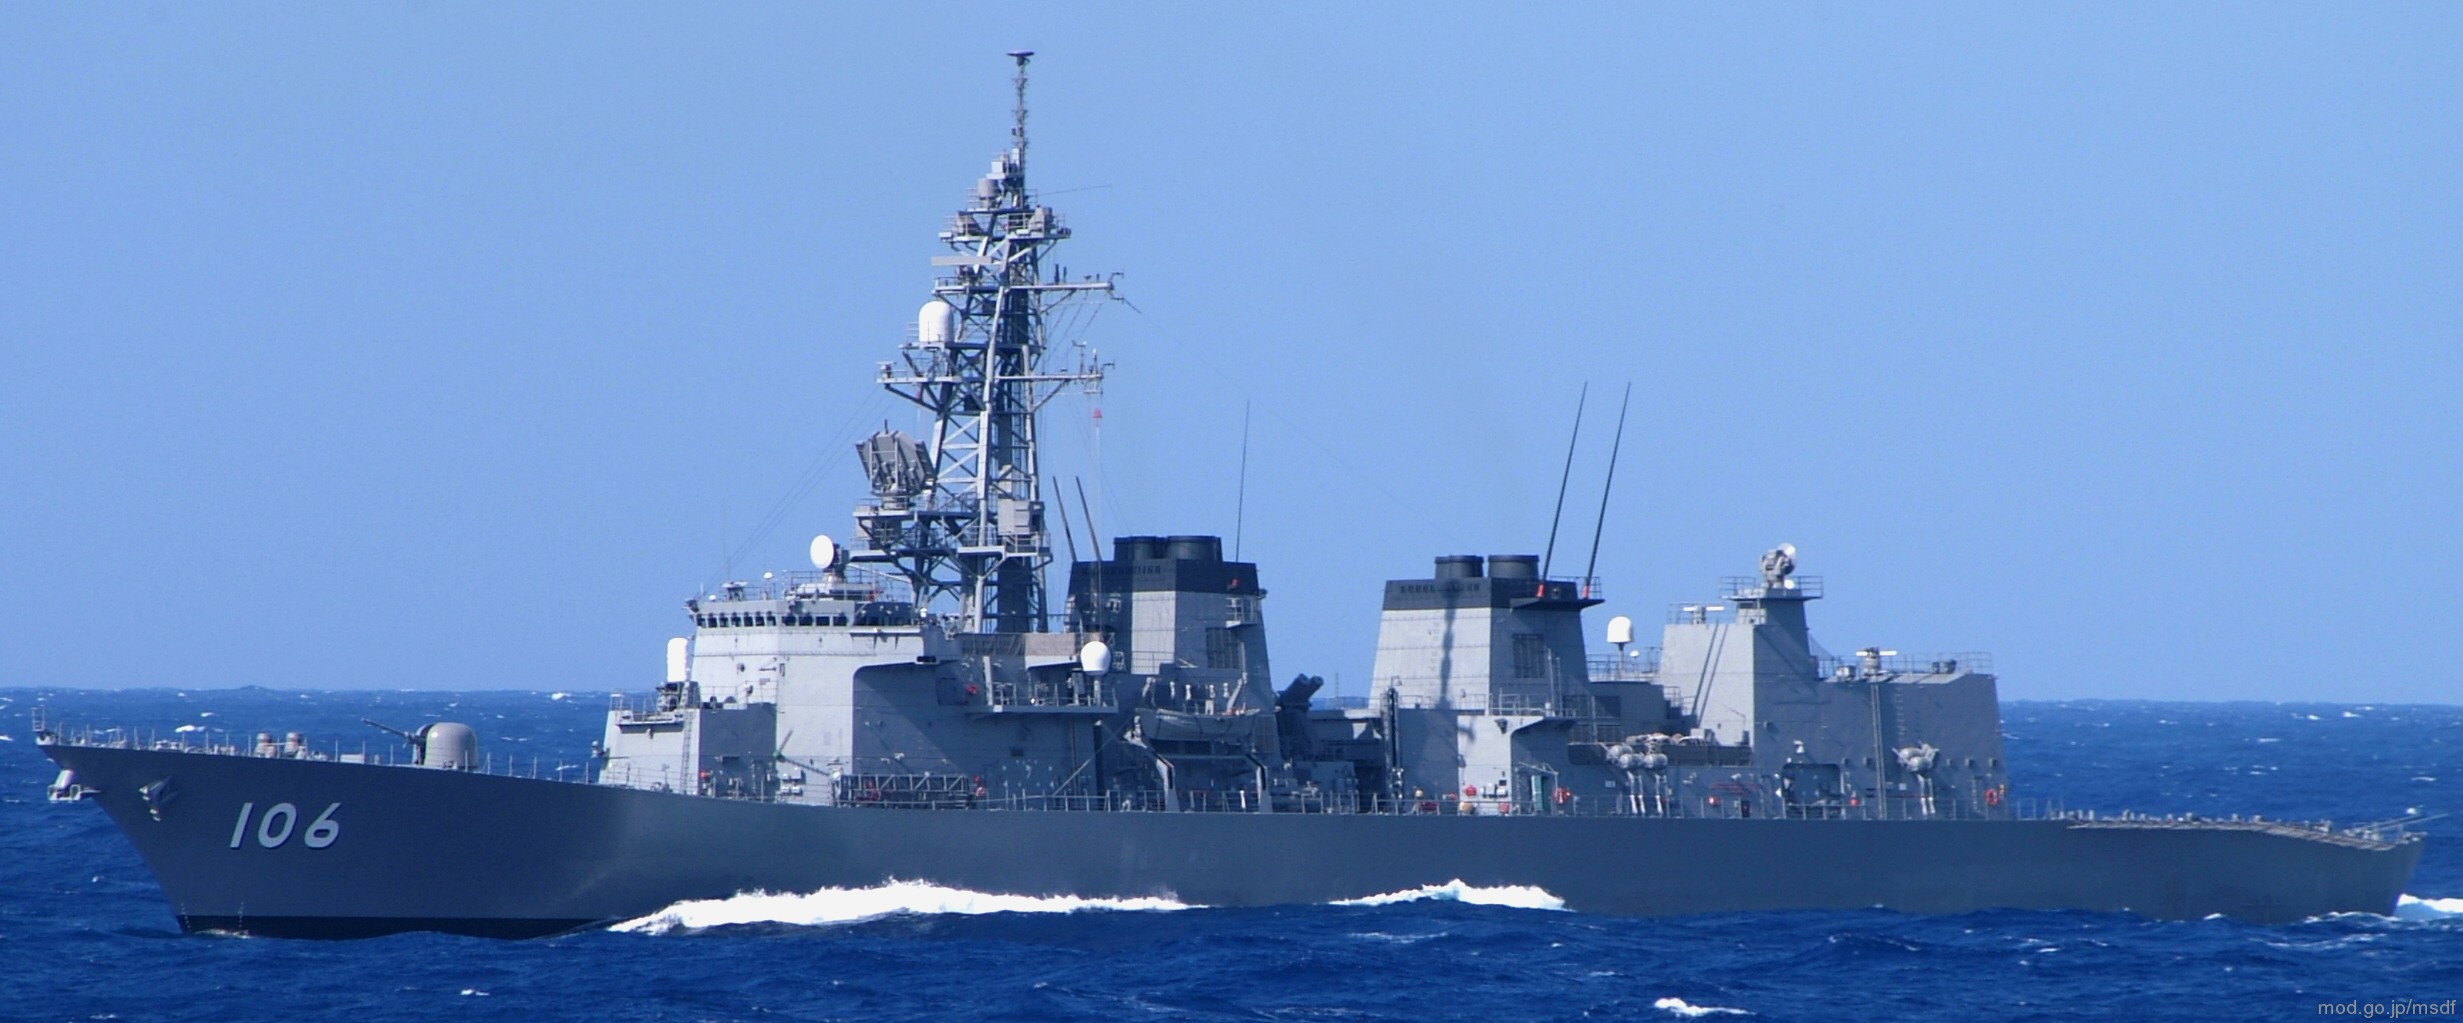 dd-106 js samidare murasame class destroyer japan maritime self defense force jmsdf 13